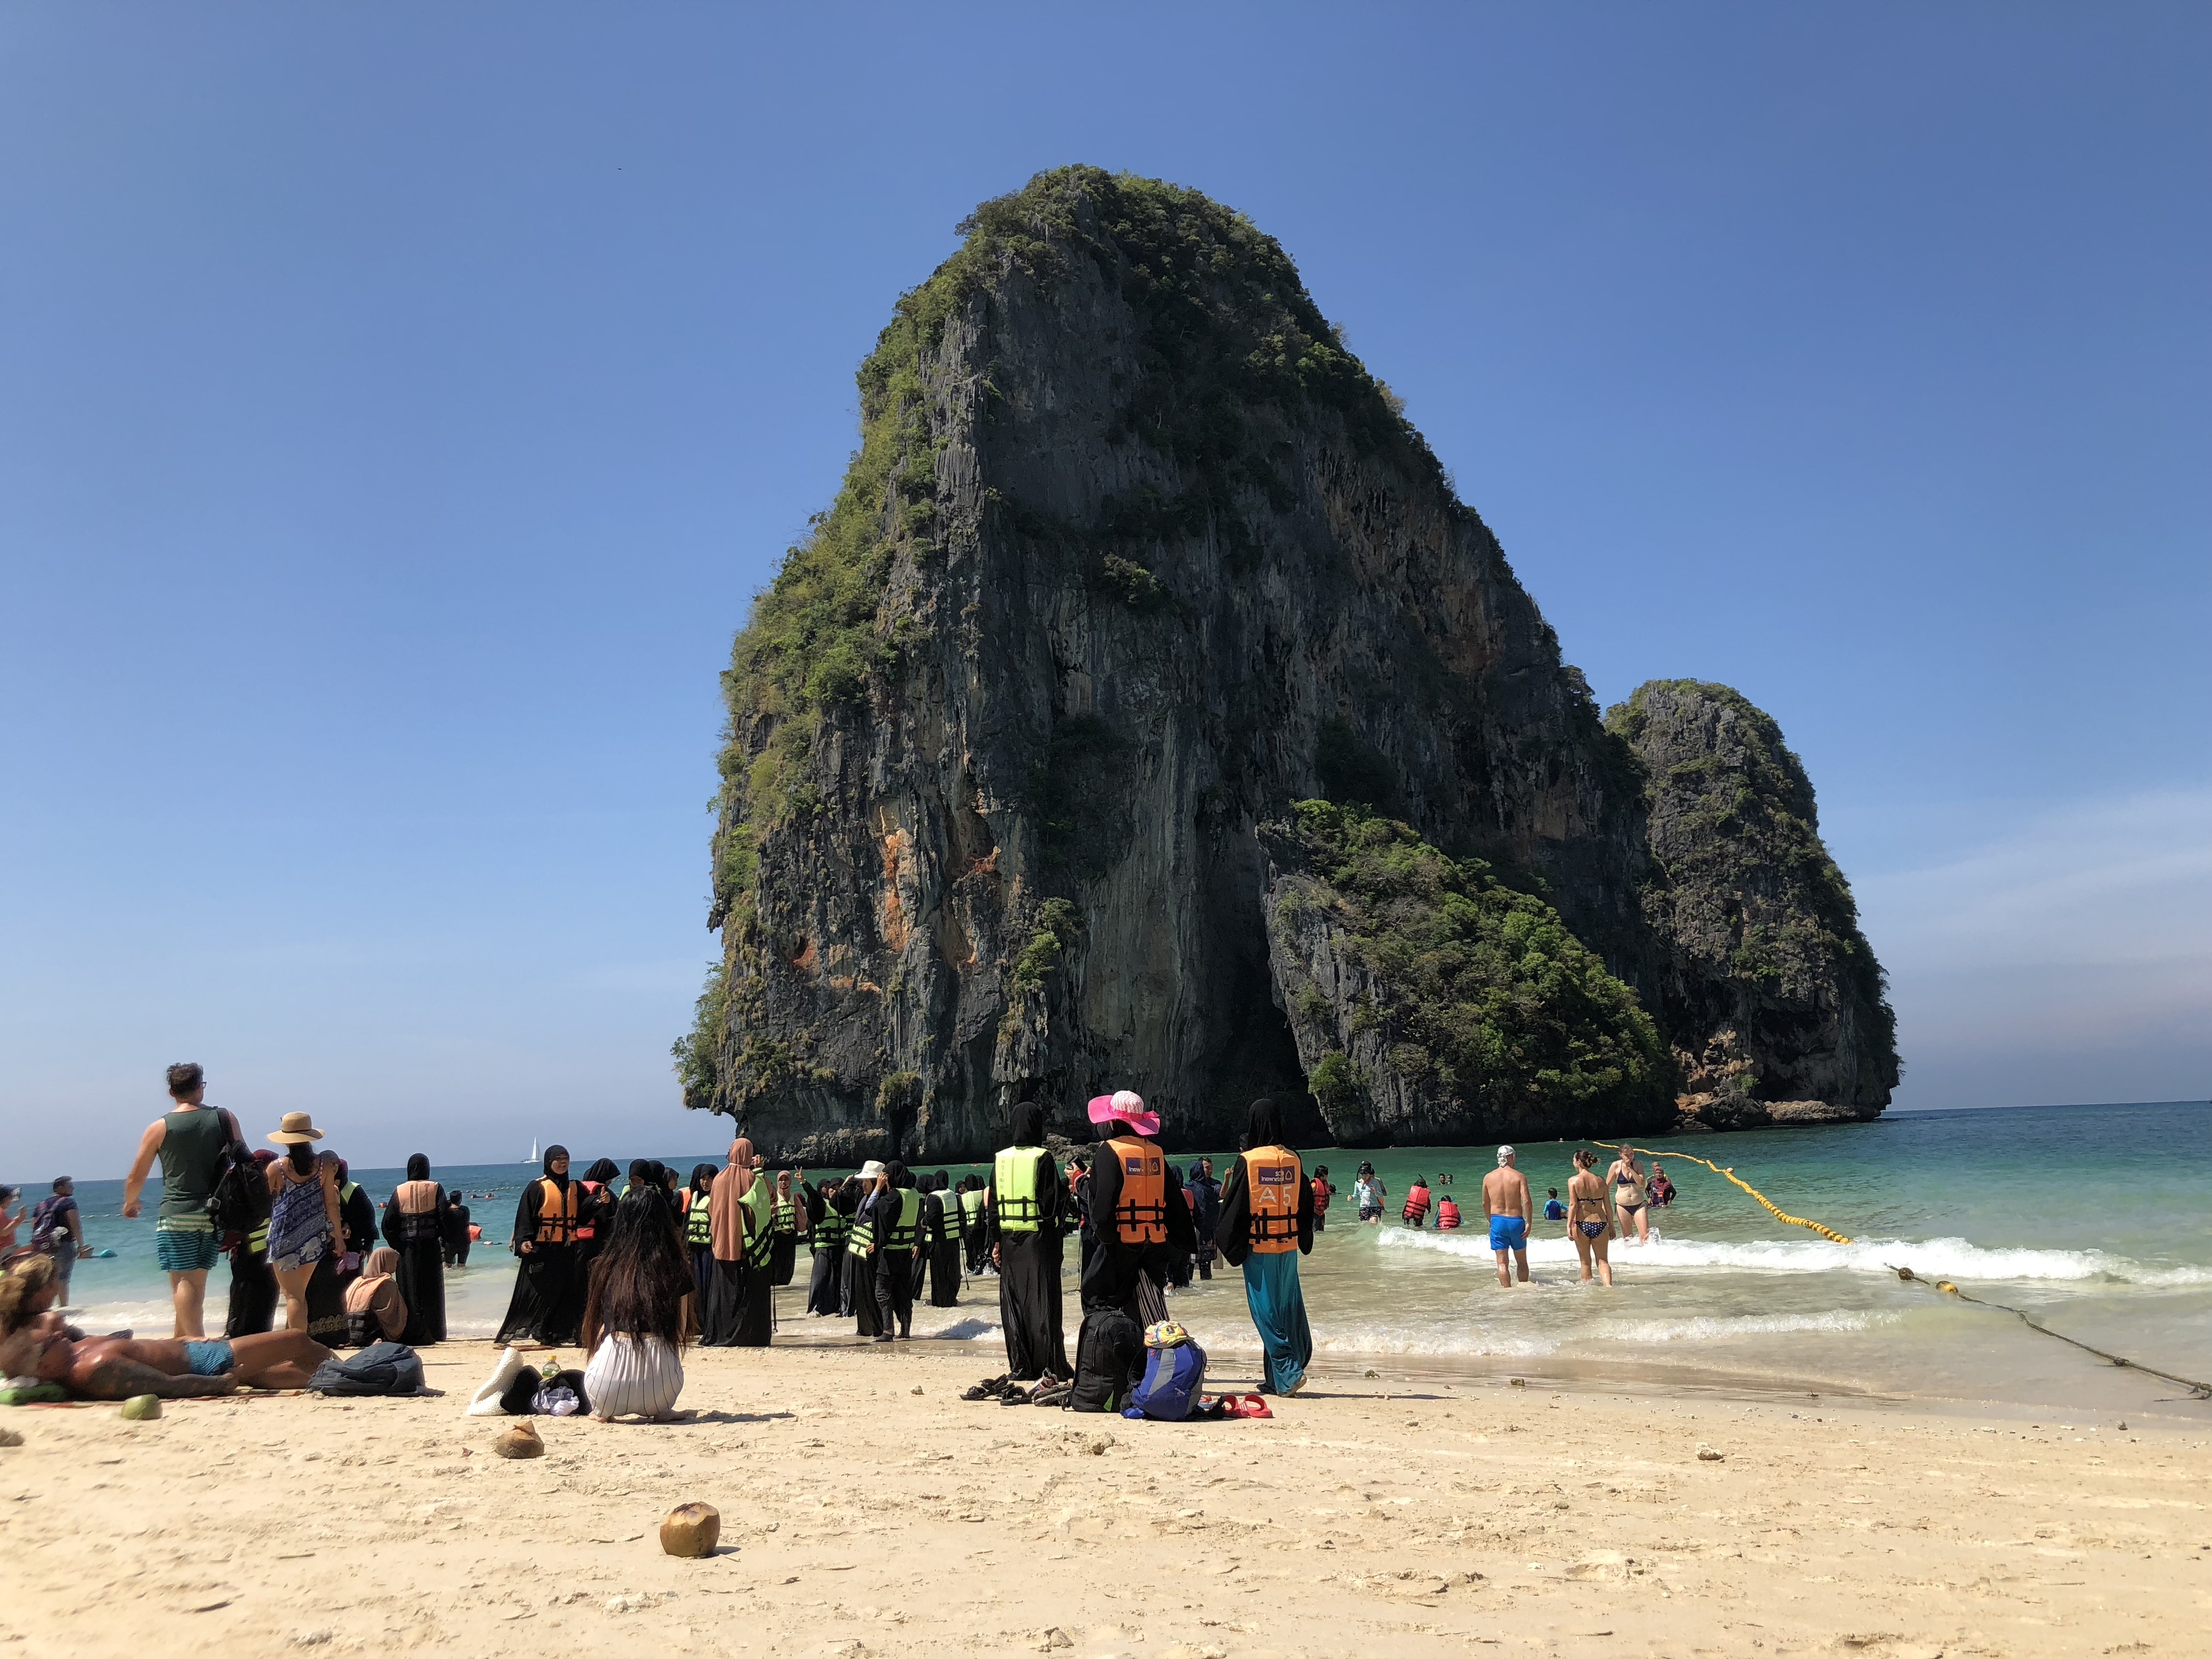 Islamic people enjoying the water in Phra Nang Cave beach